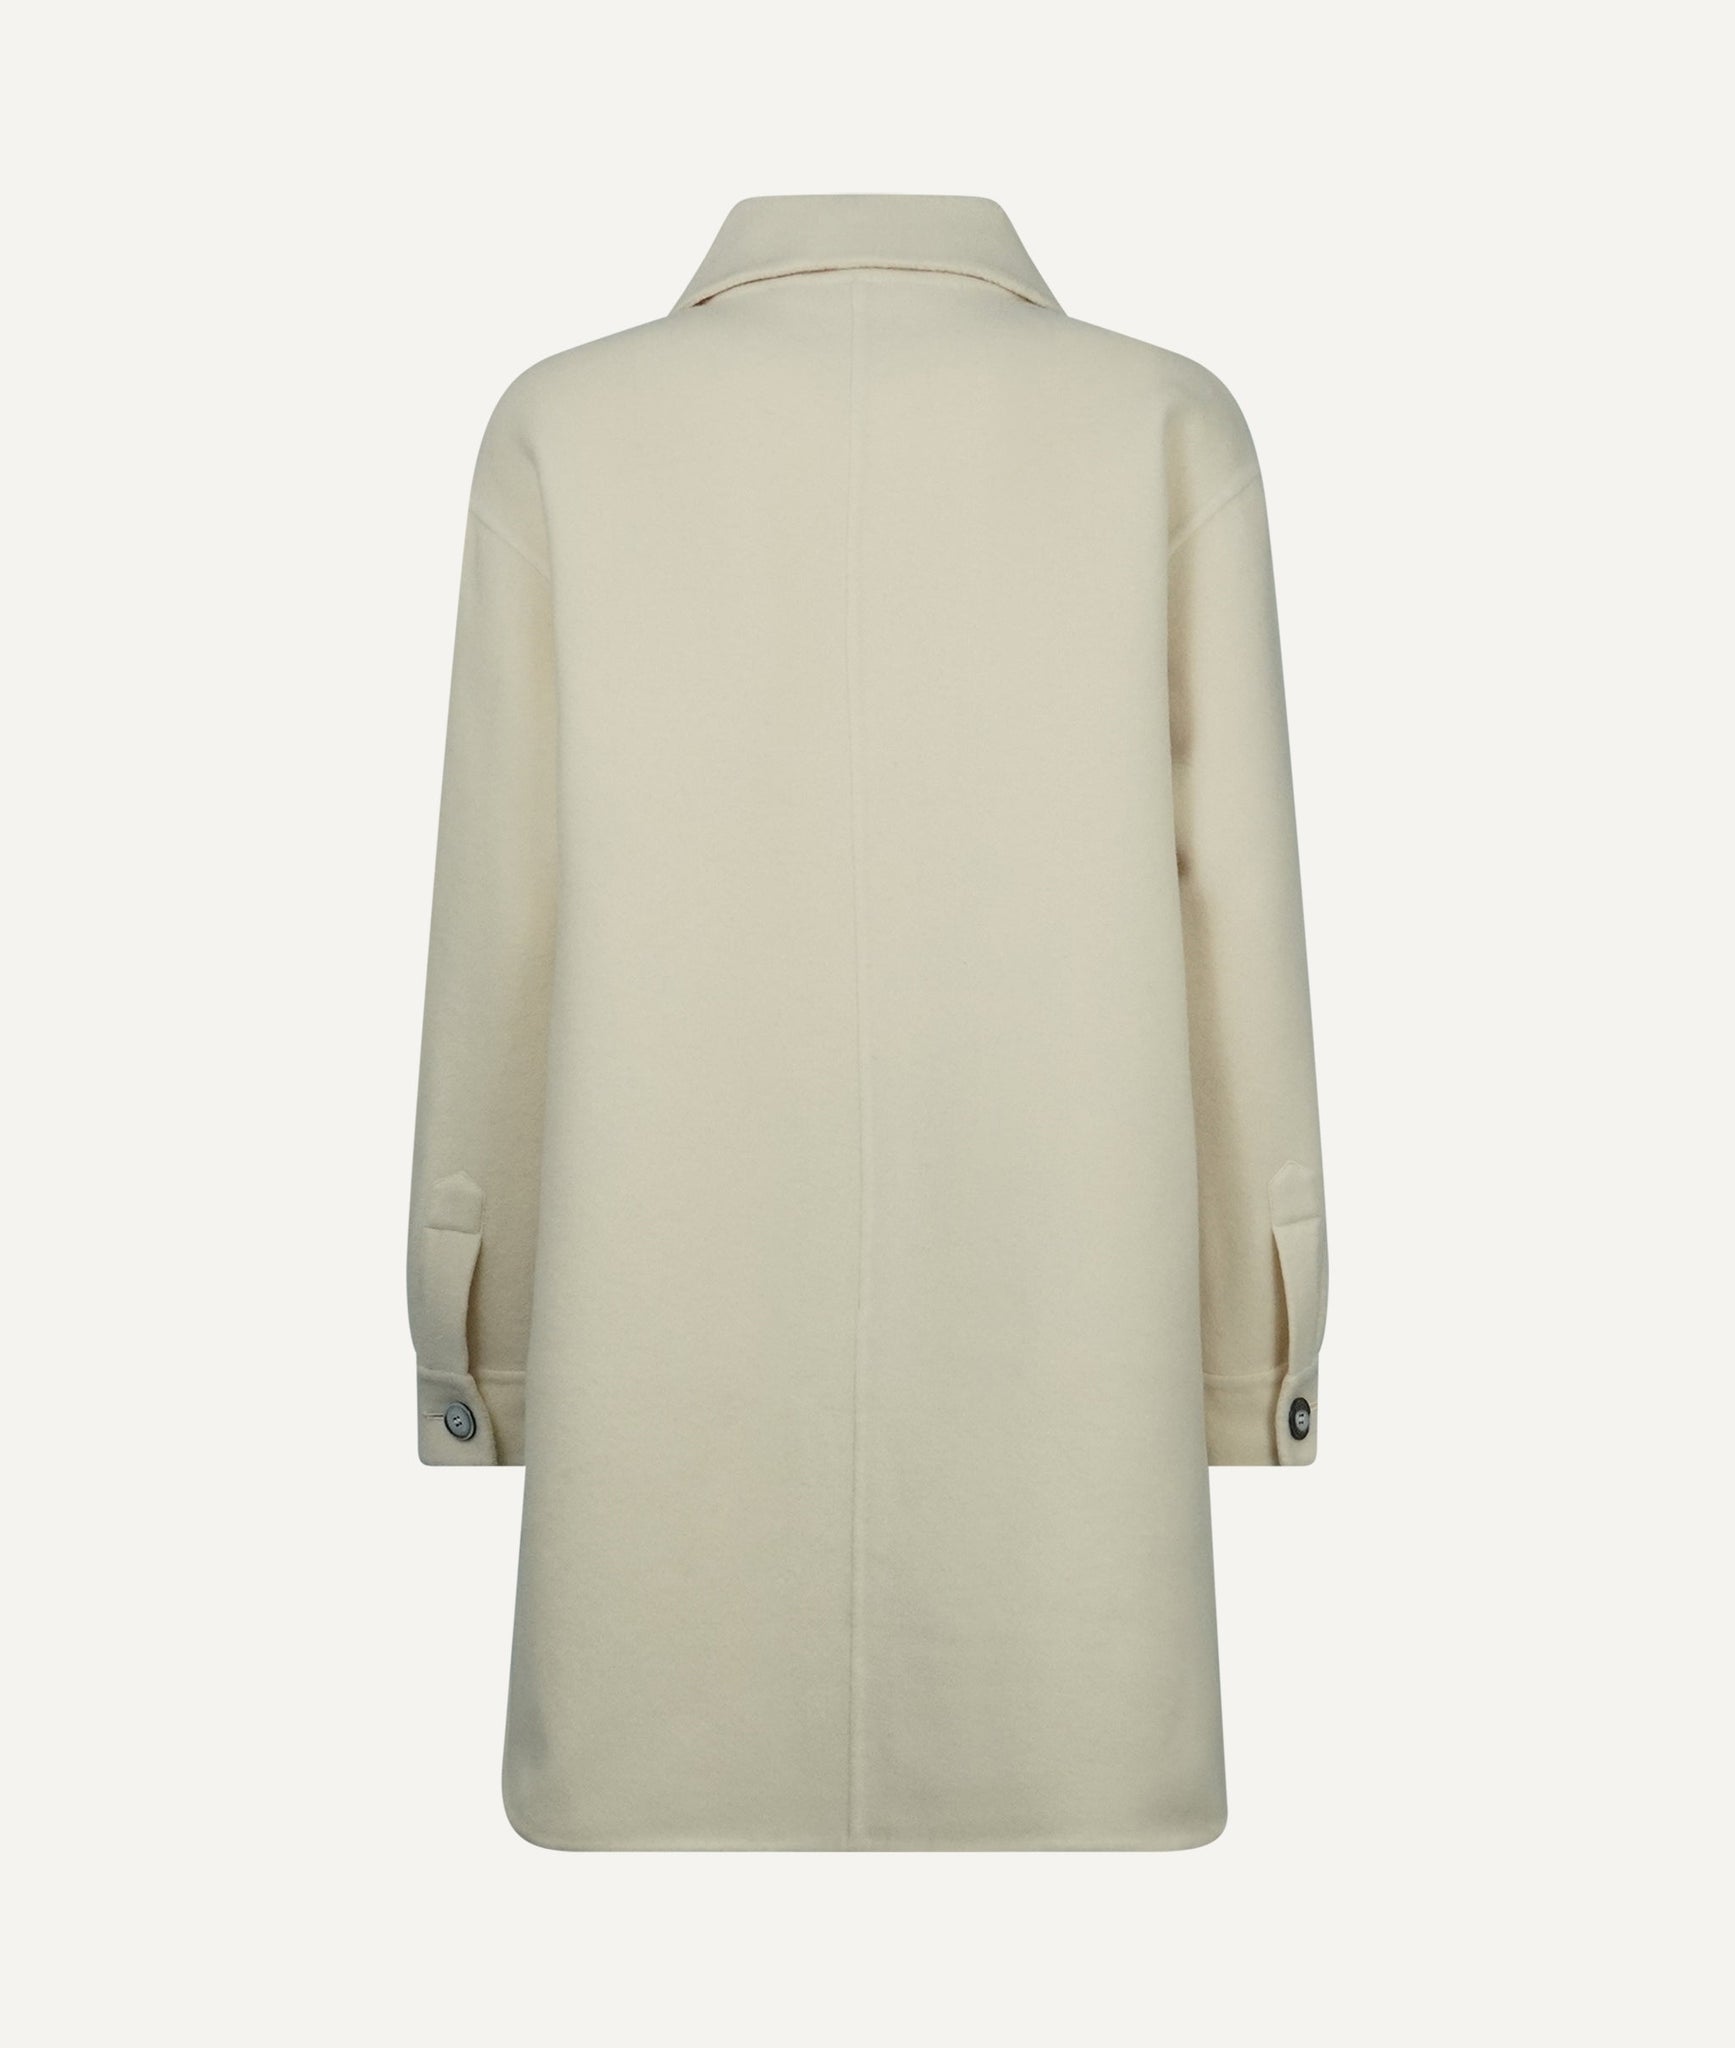 Fedeli - Coat in Virgin Wool & Cashmere